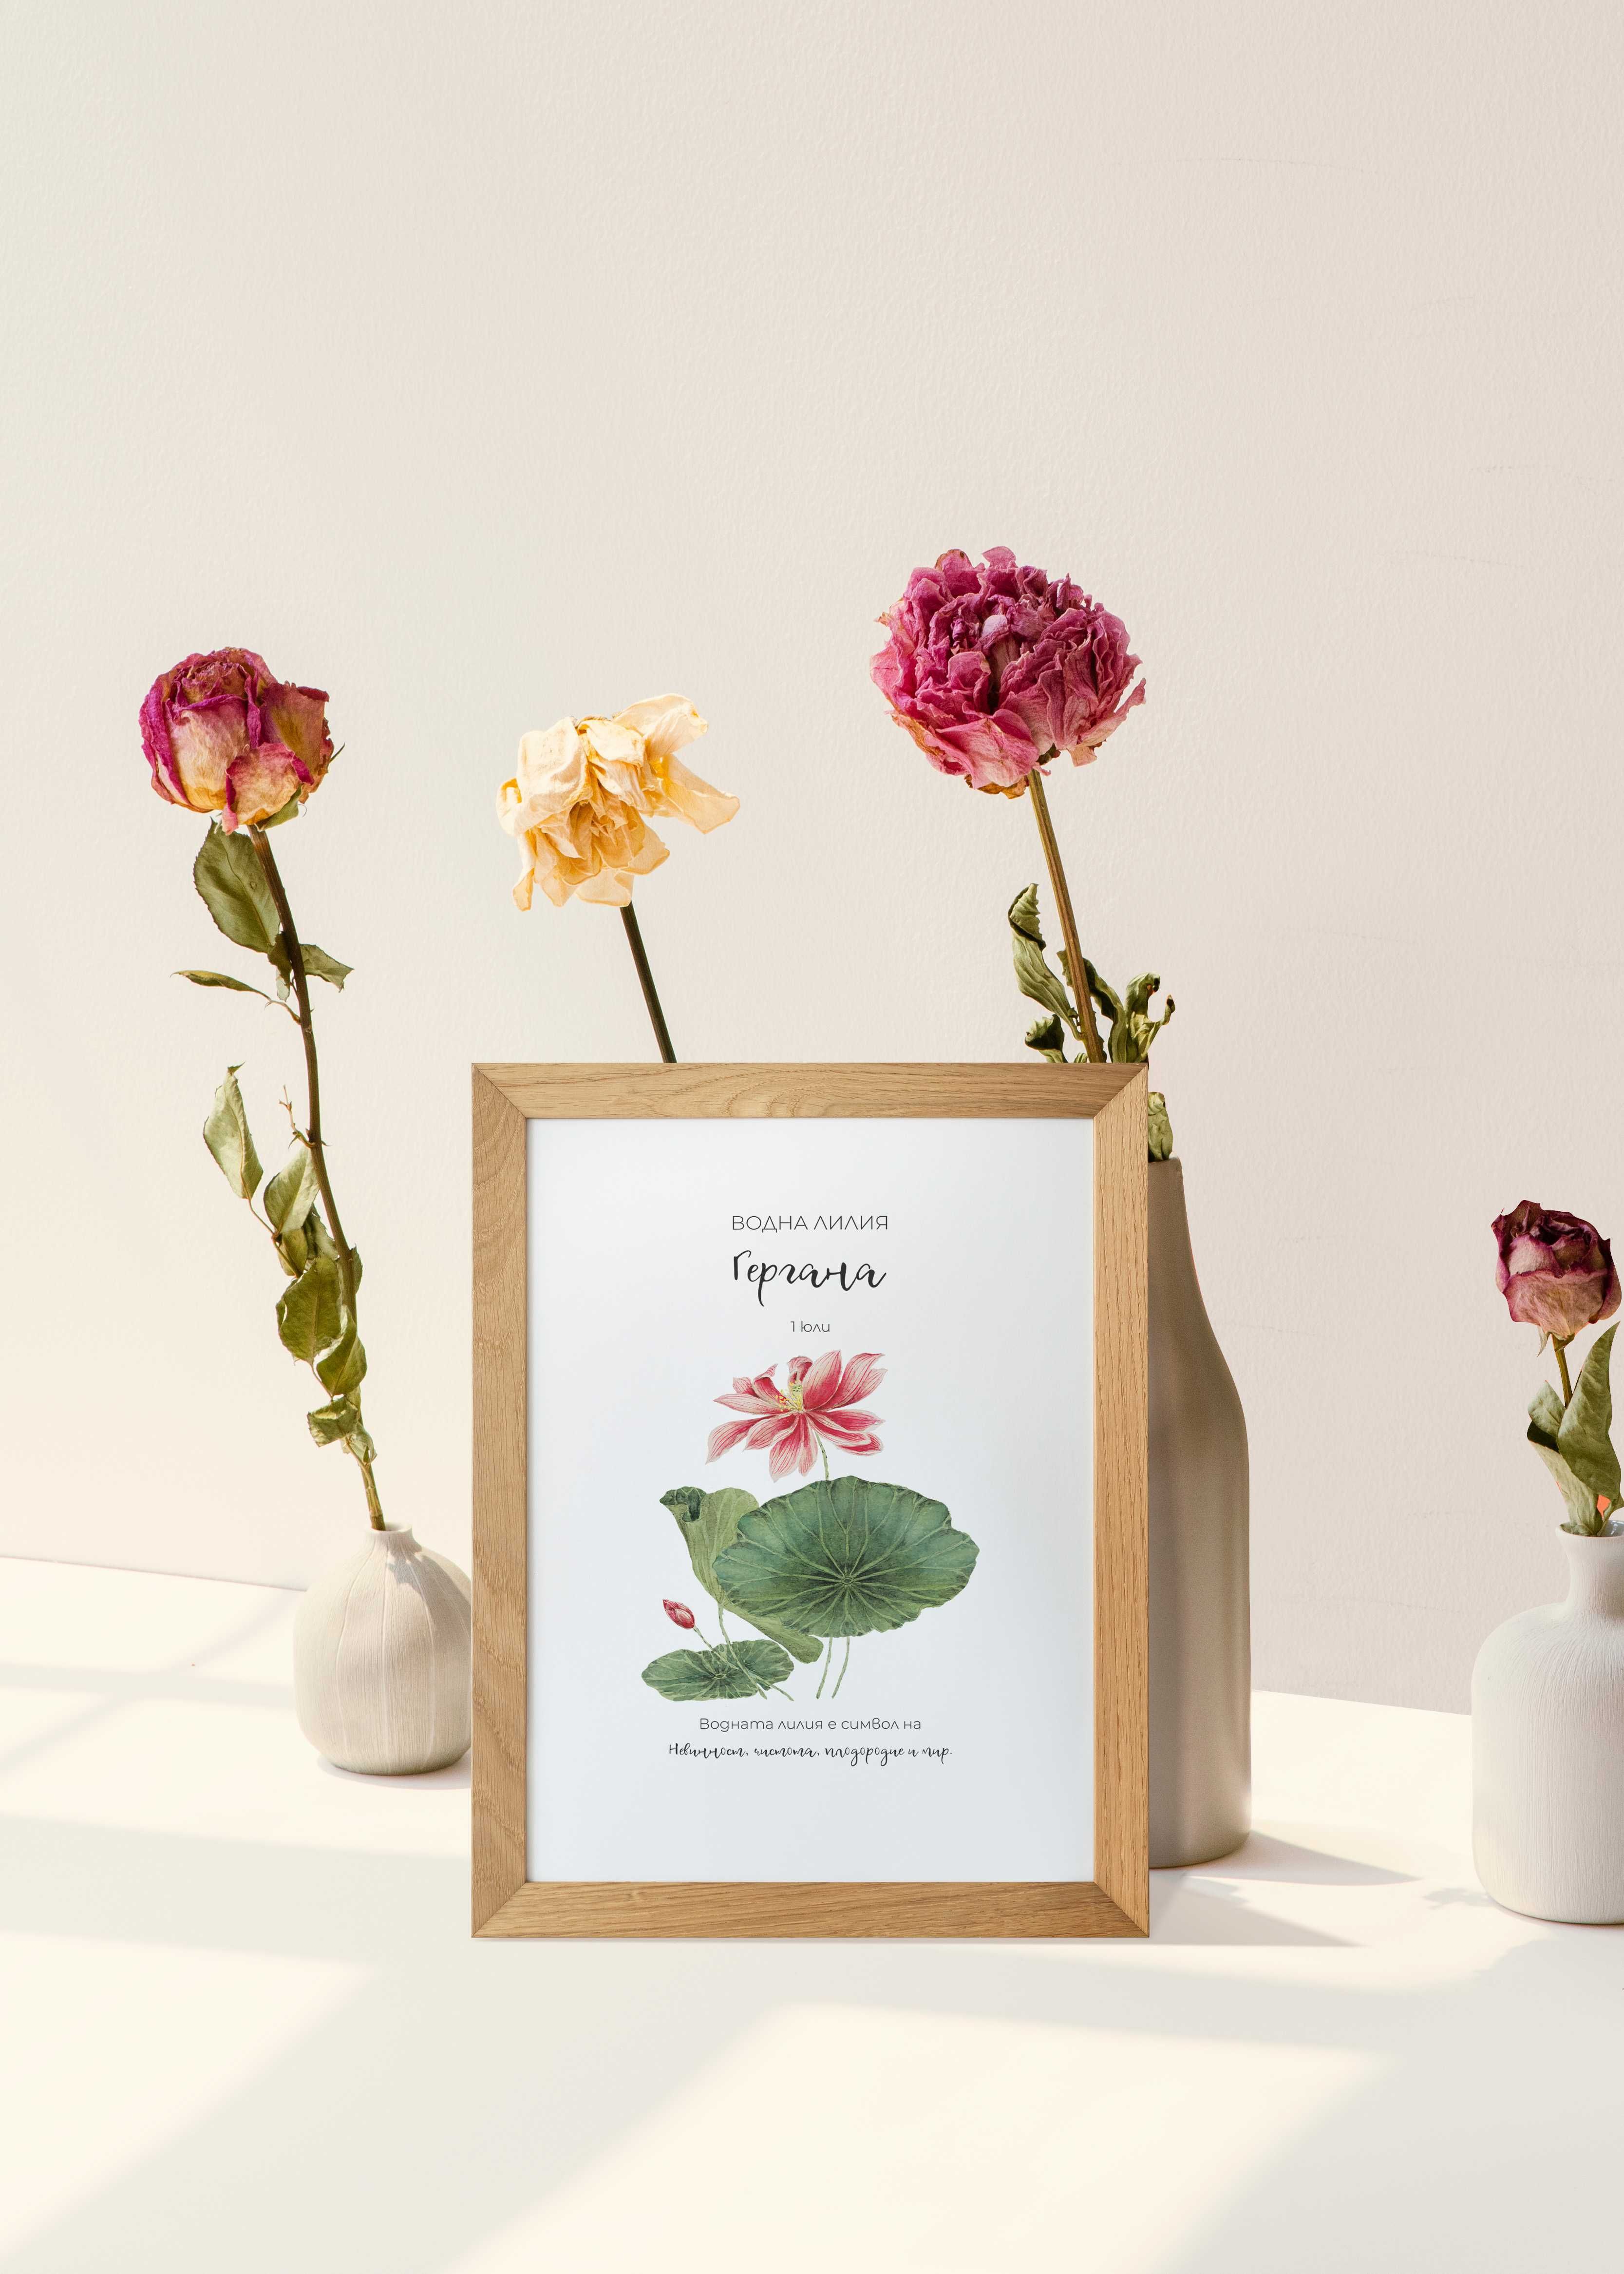 Принт с рождено цвете / Birth Month Flowers print, картина, постер